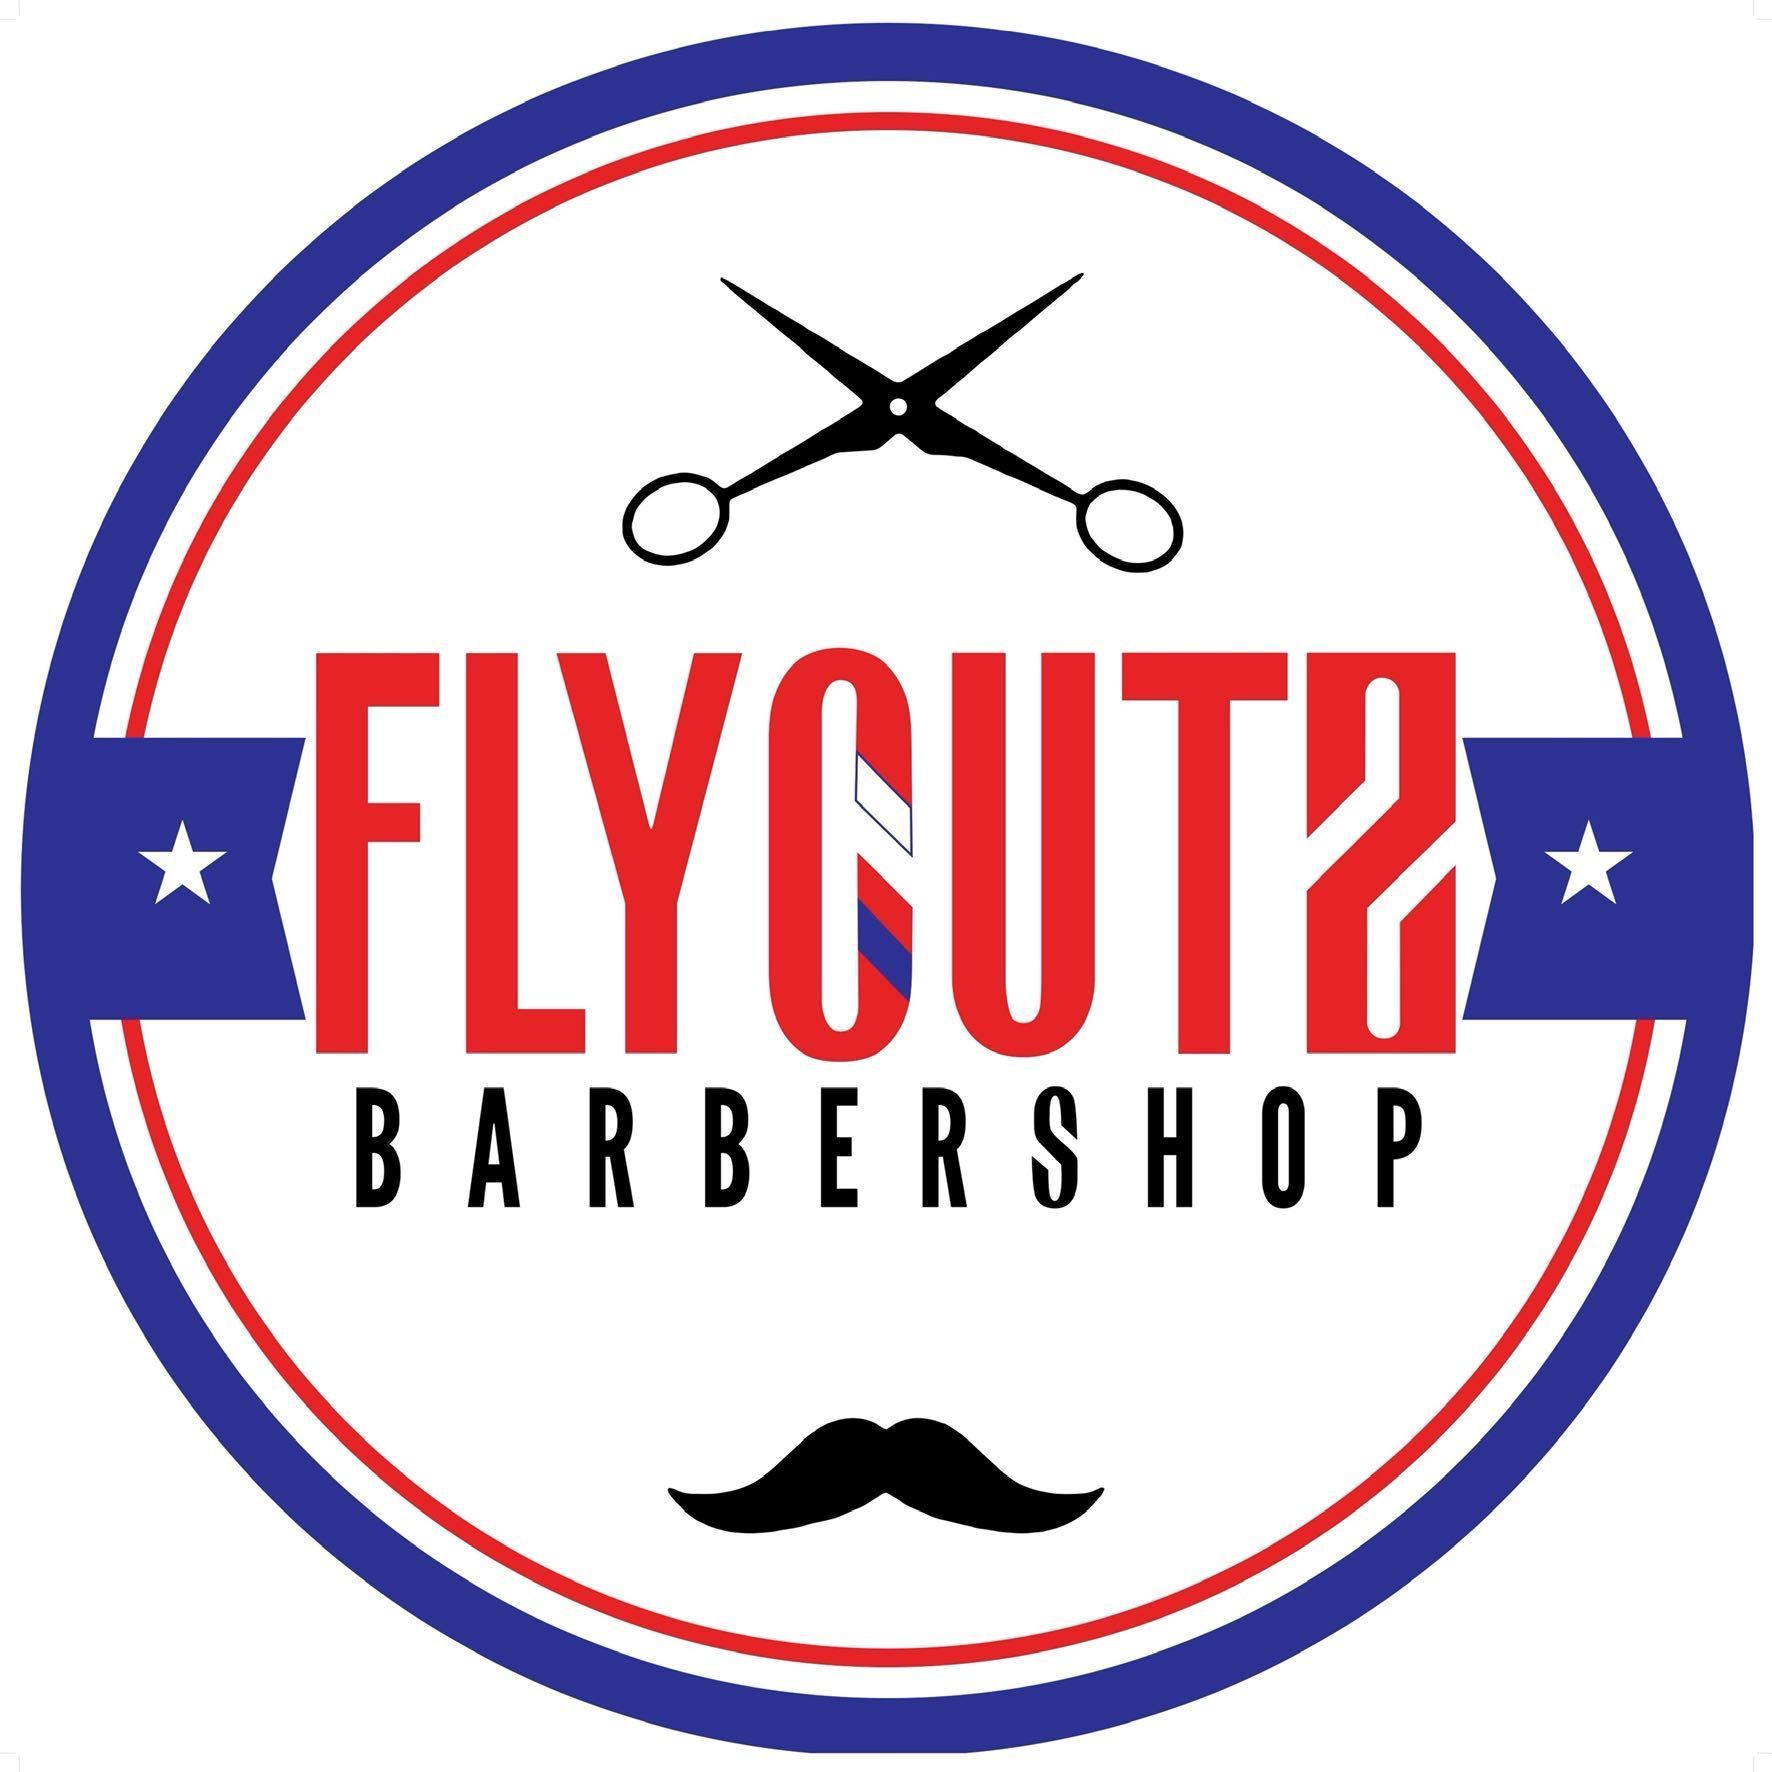 Flycutz Barbershop Denver, 5034 E Colfax Ave, Denver, 80220